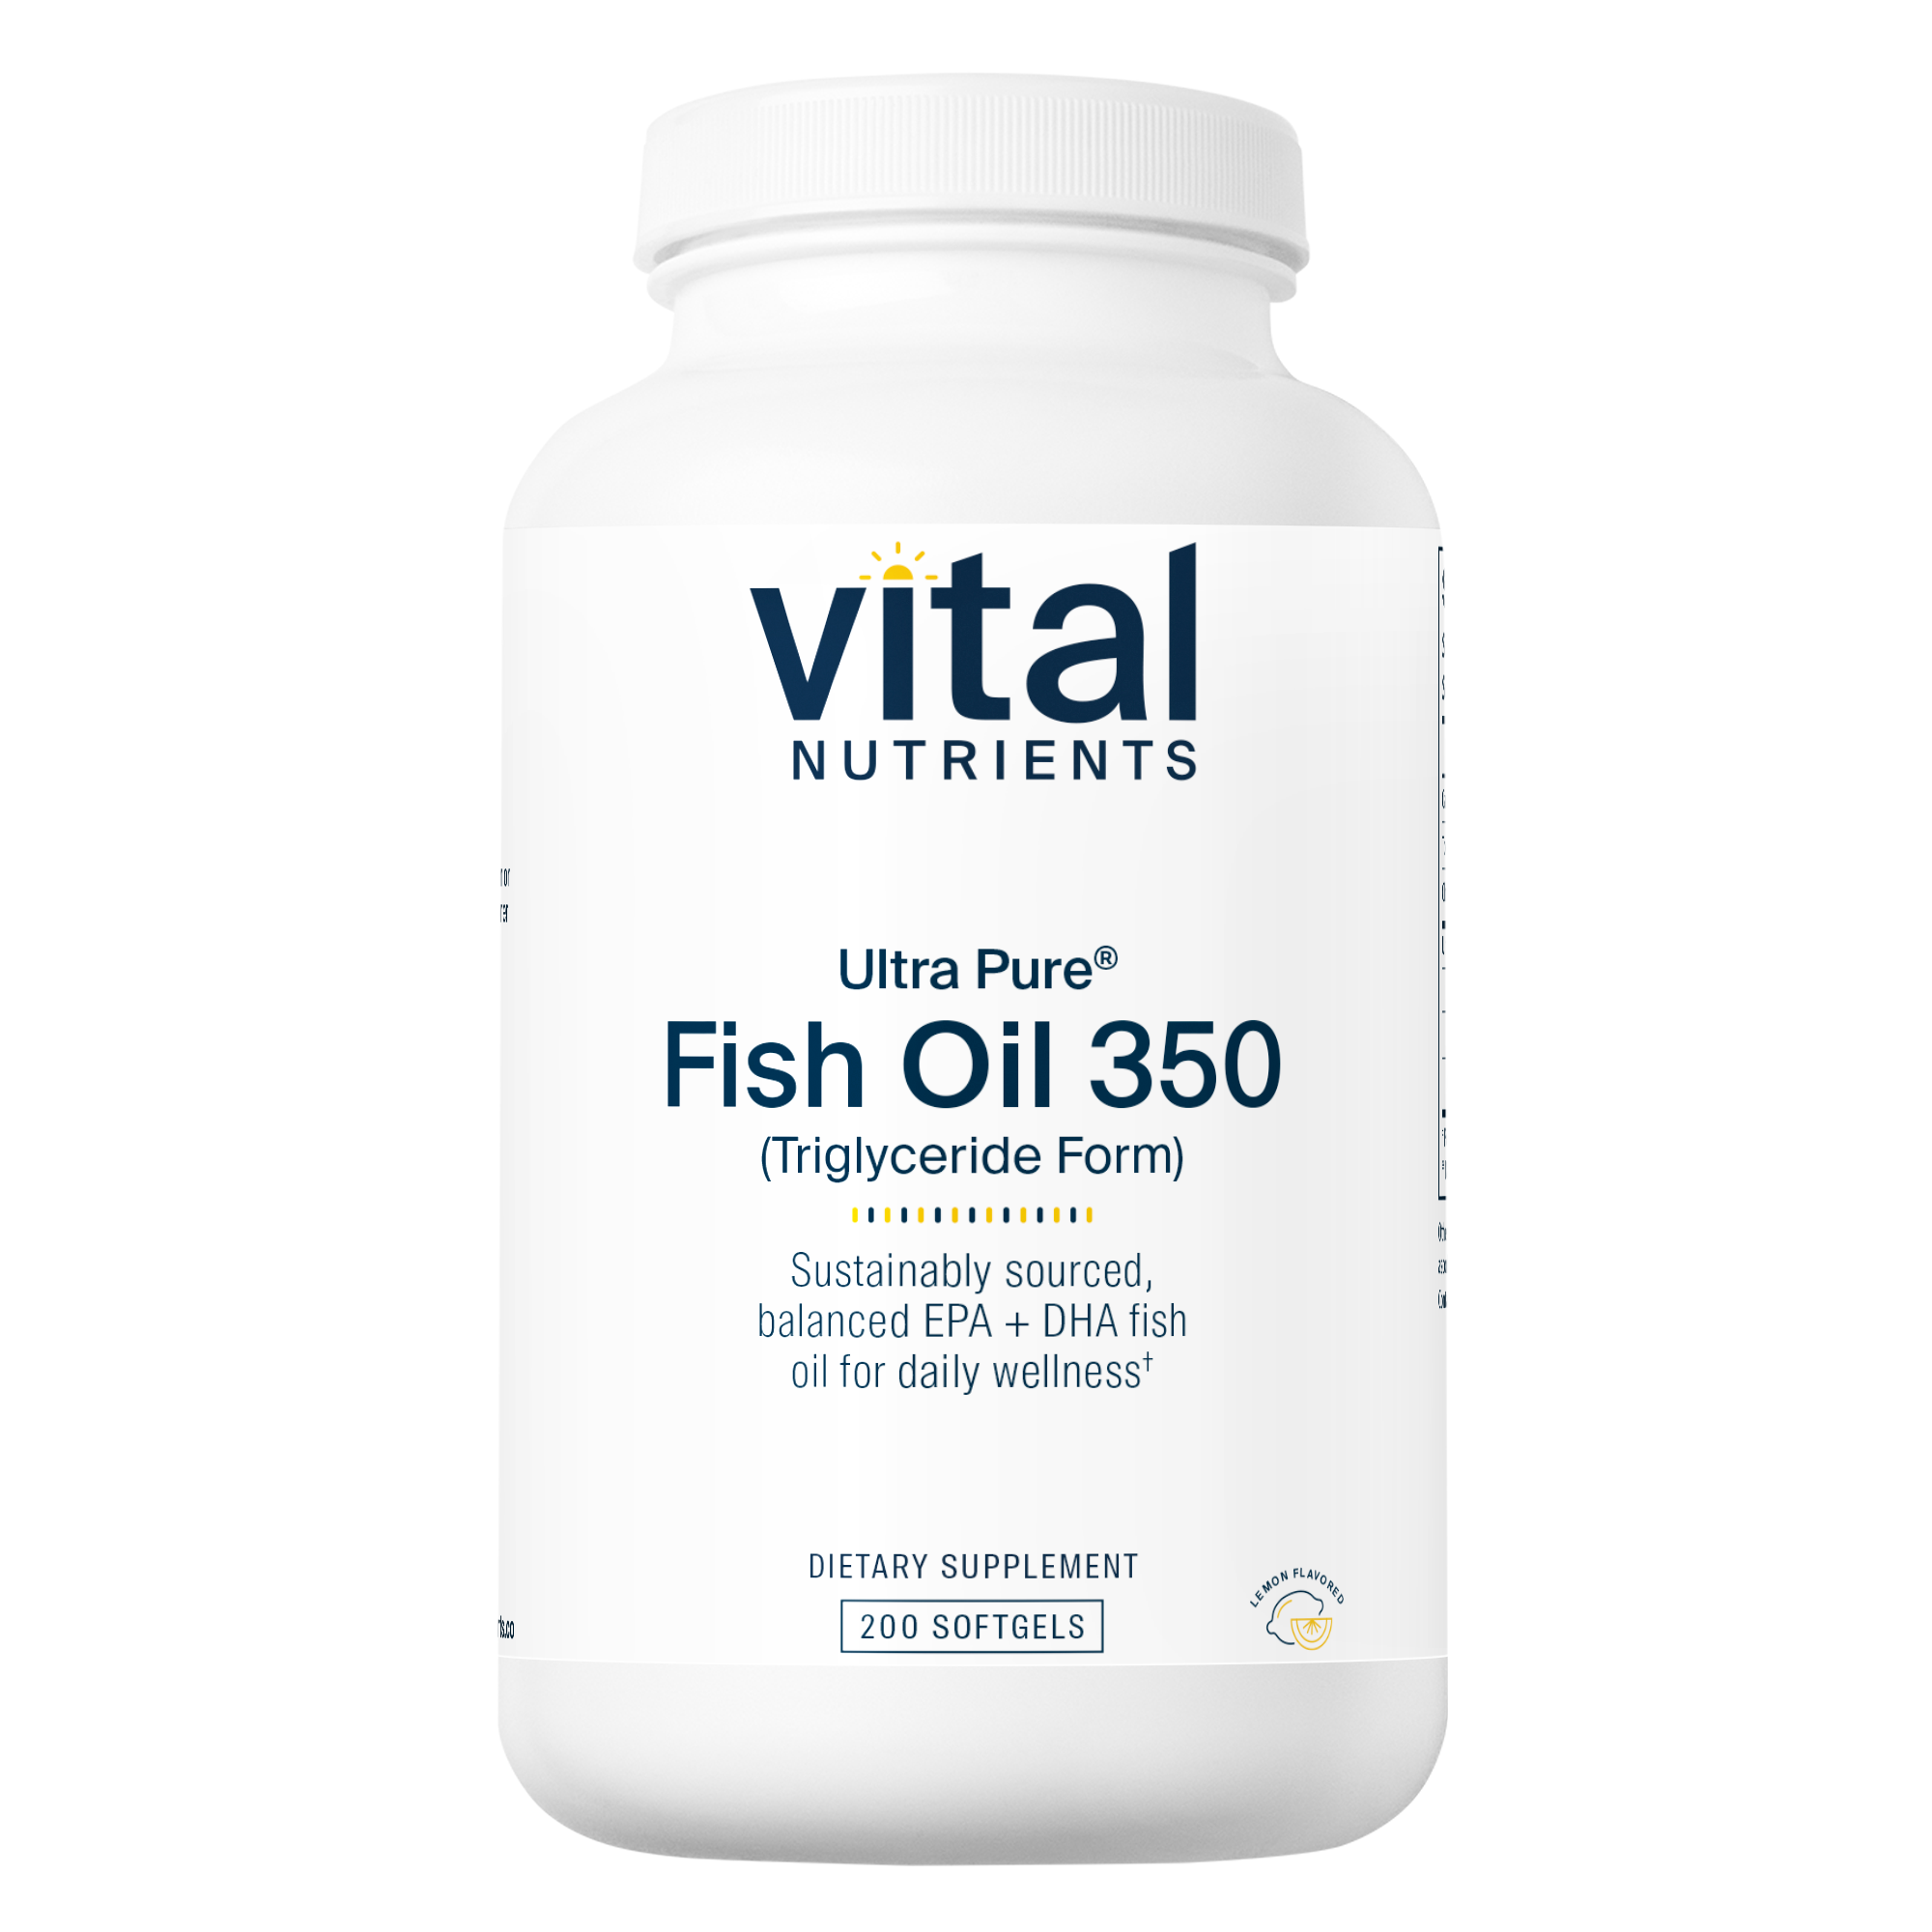 Vital Nutrients Ultra Pure Fish Oil 350 (Triglyceride Form) 200 softgels bottle